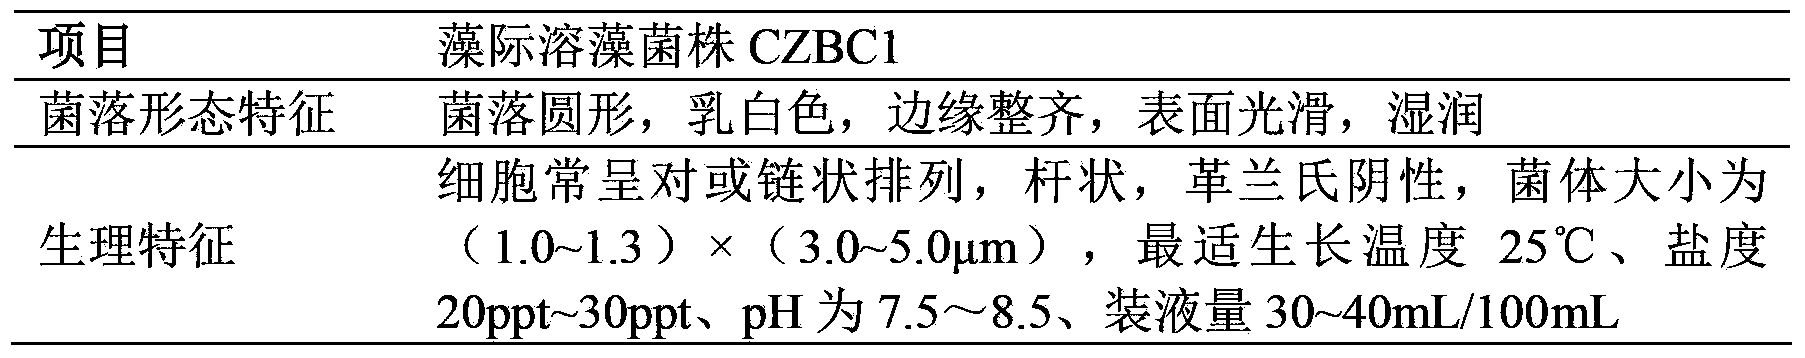 Bacillus cereus strain CZBC1 capable of dissolving pond oscillatoria, and its application